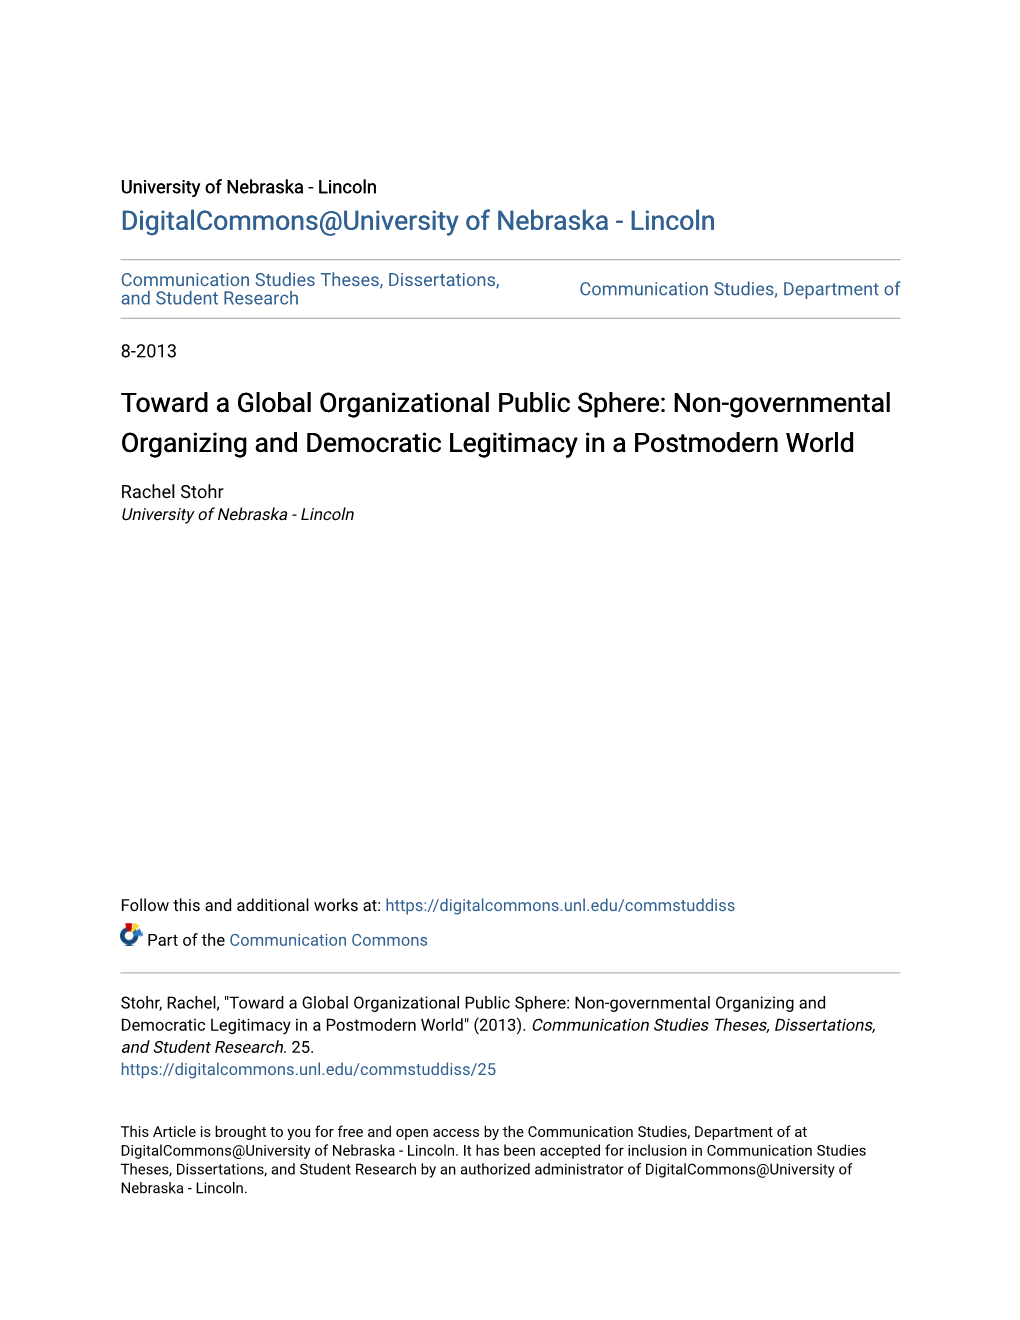 Toward a Global Organizational Public Sphere: Non-Governmental Organizing and Democratic Legitimacy in a Postmodern World